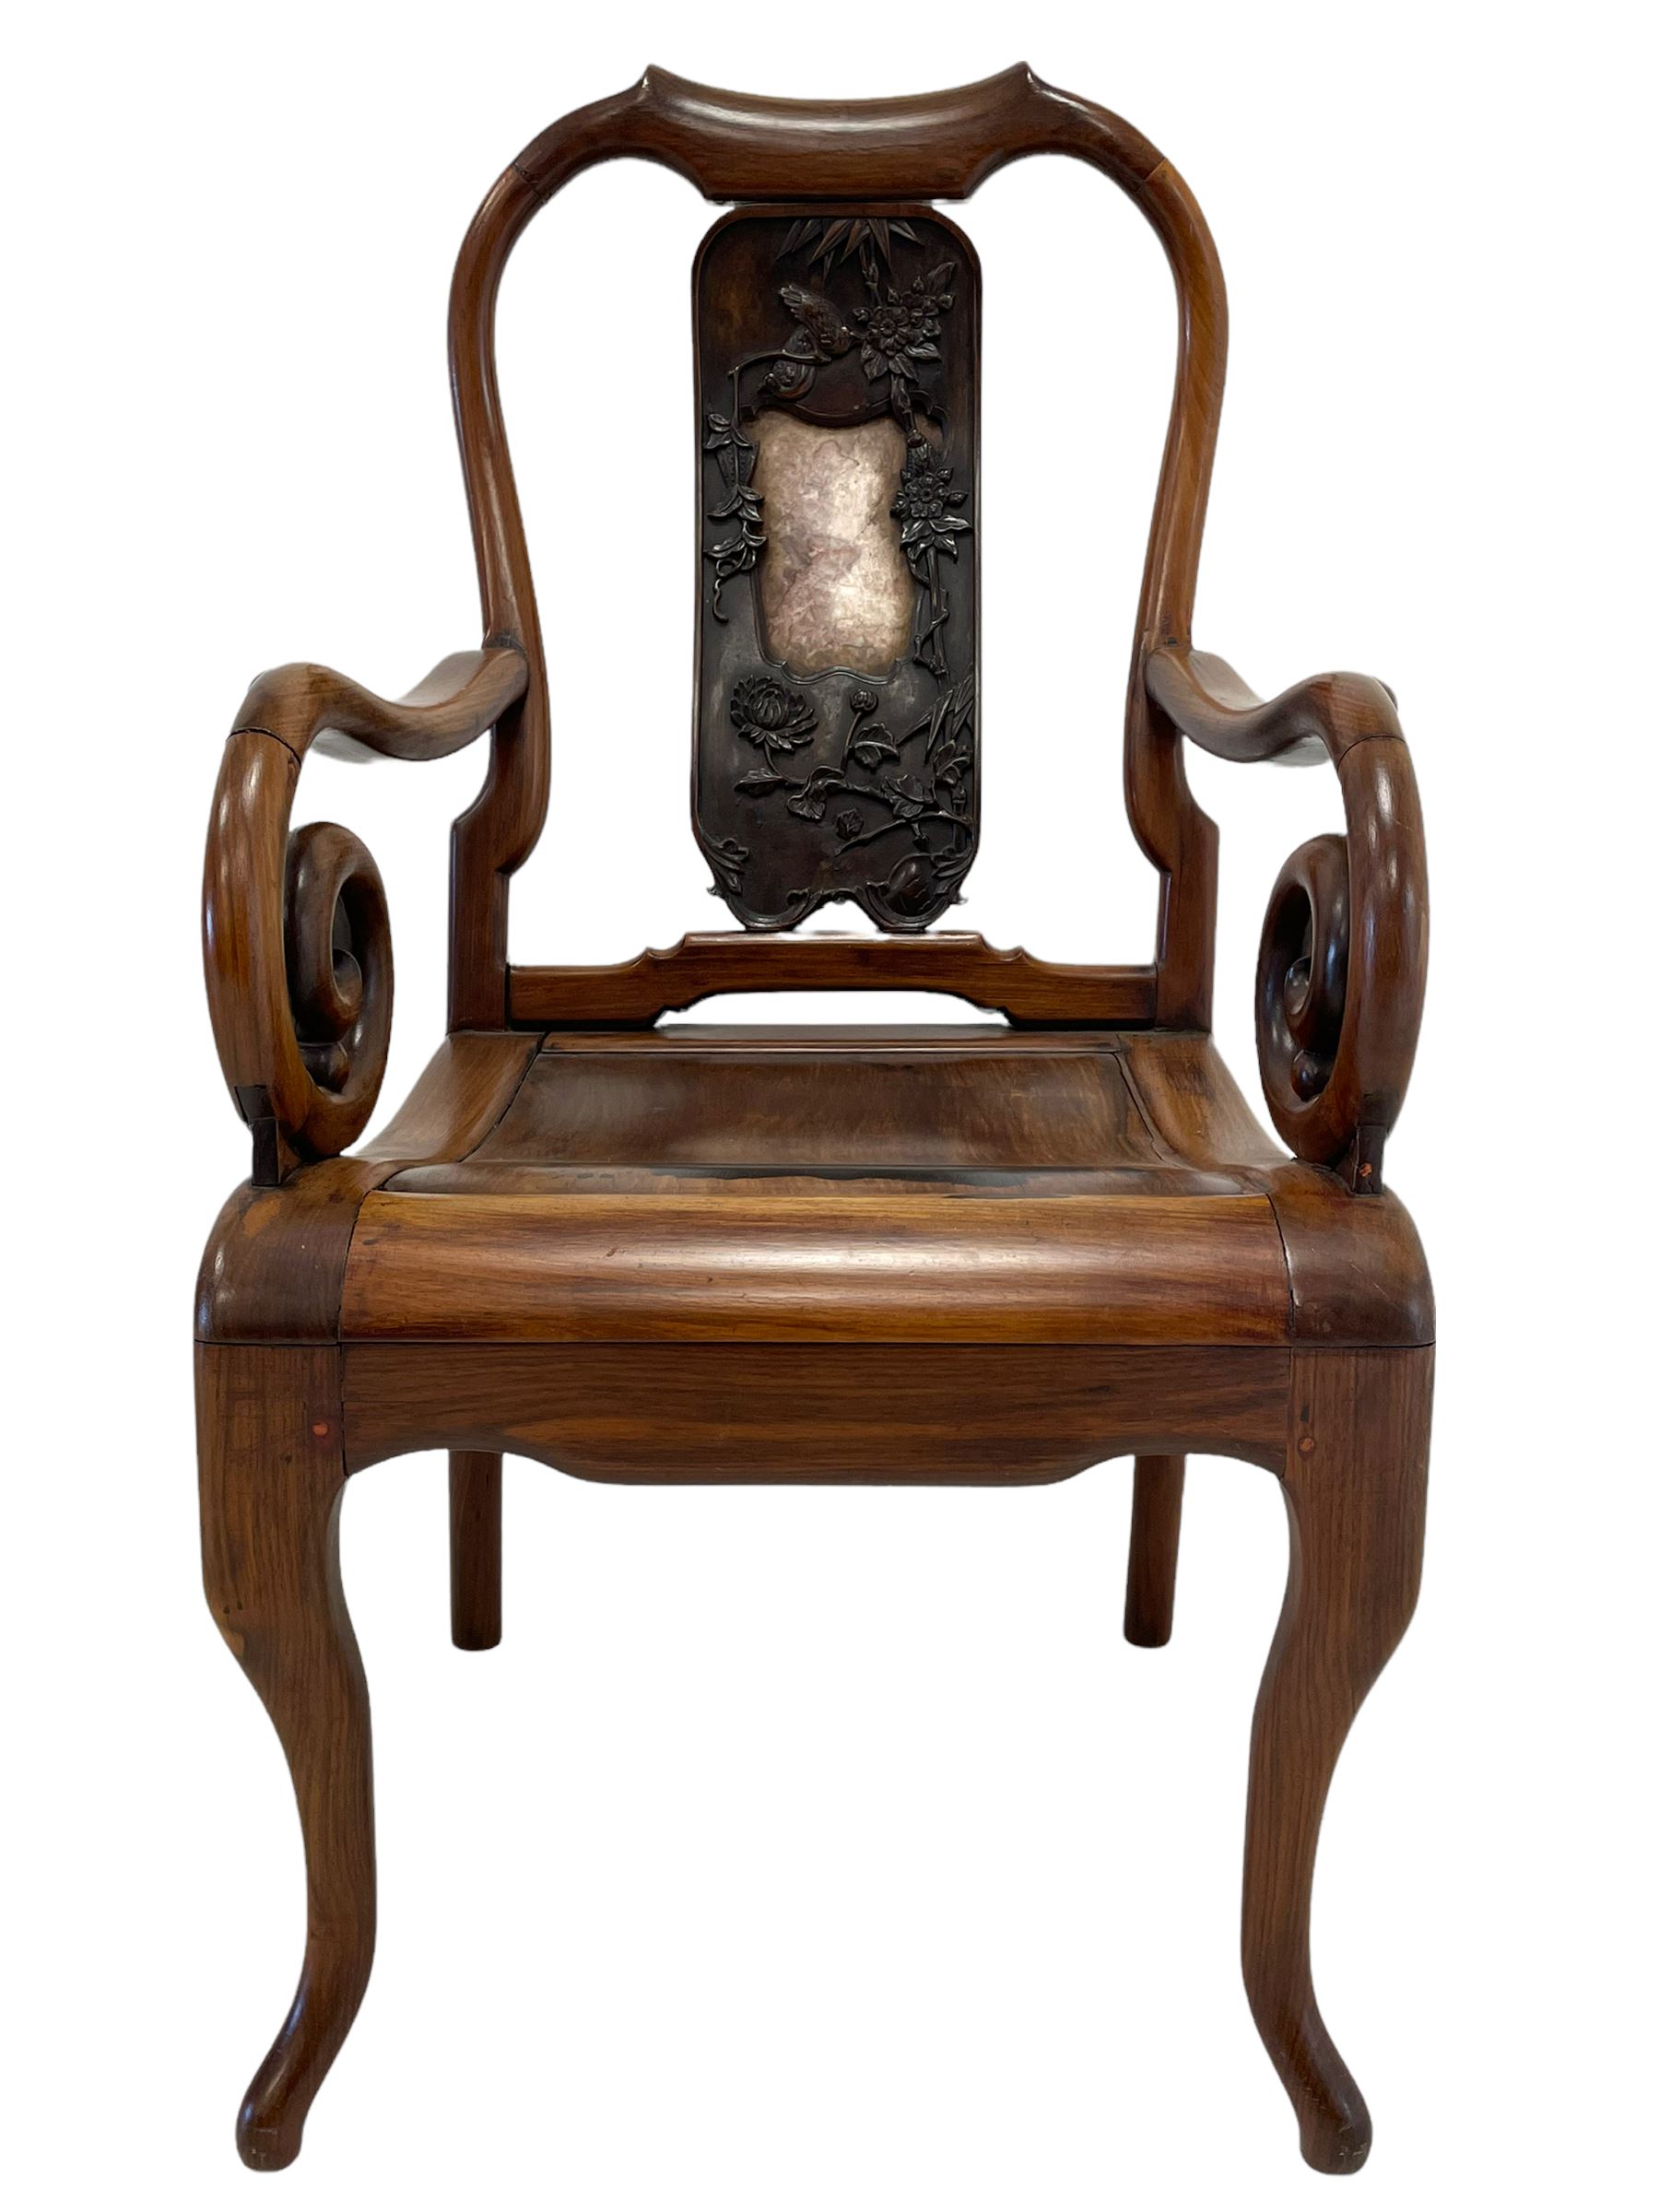 Chinese hardwood open armchair - Image 2 of 6